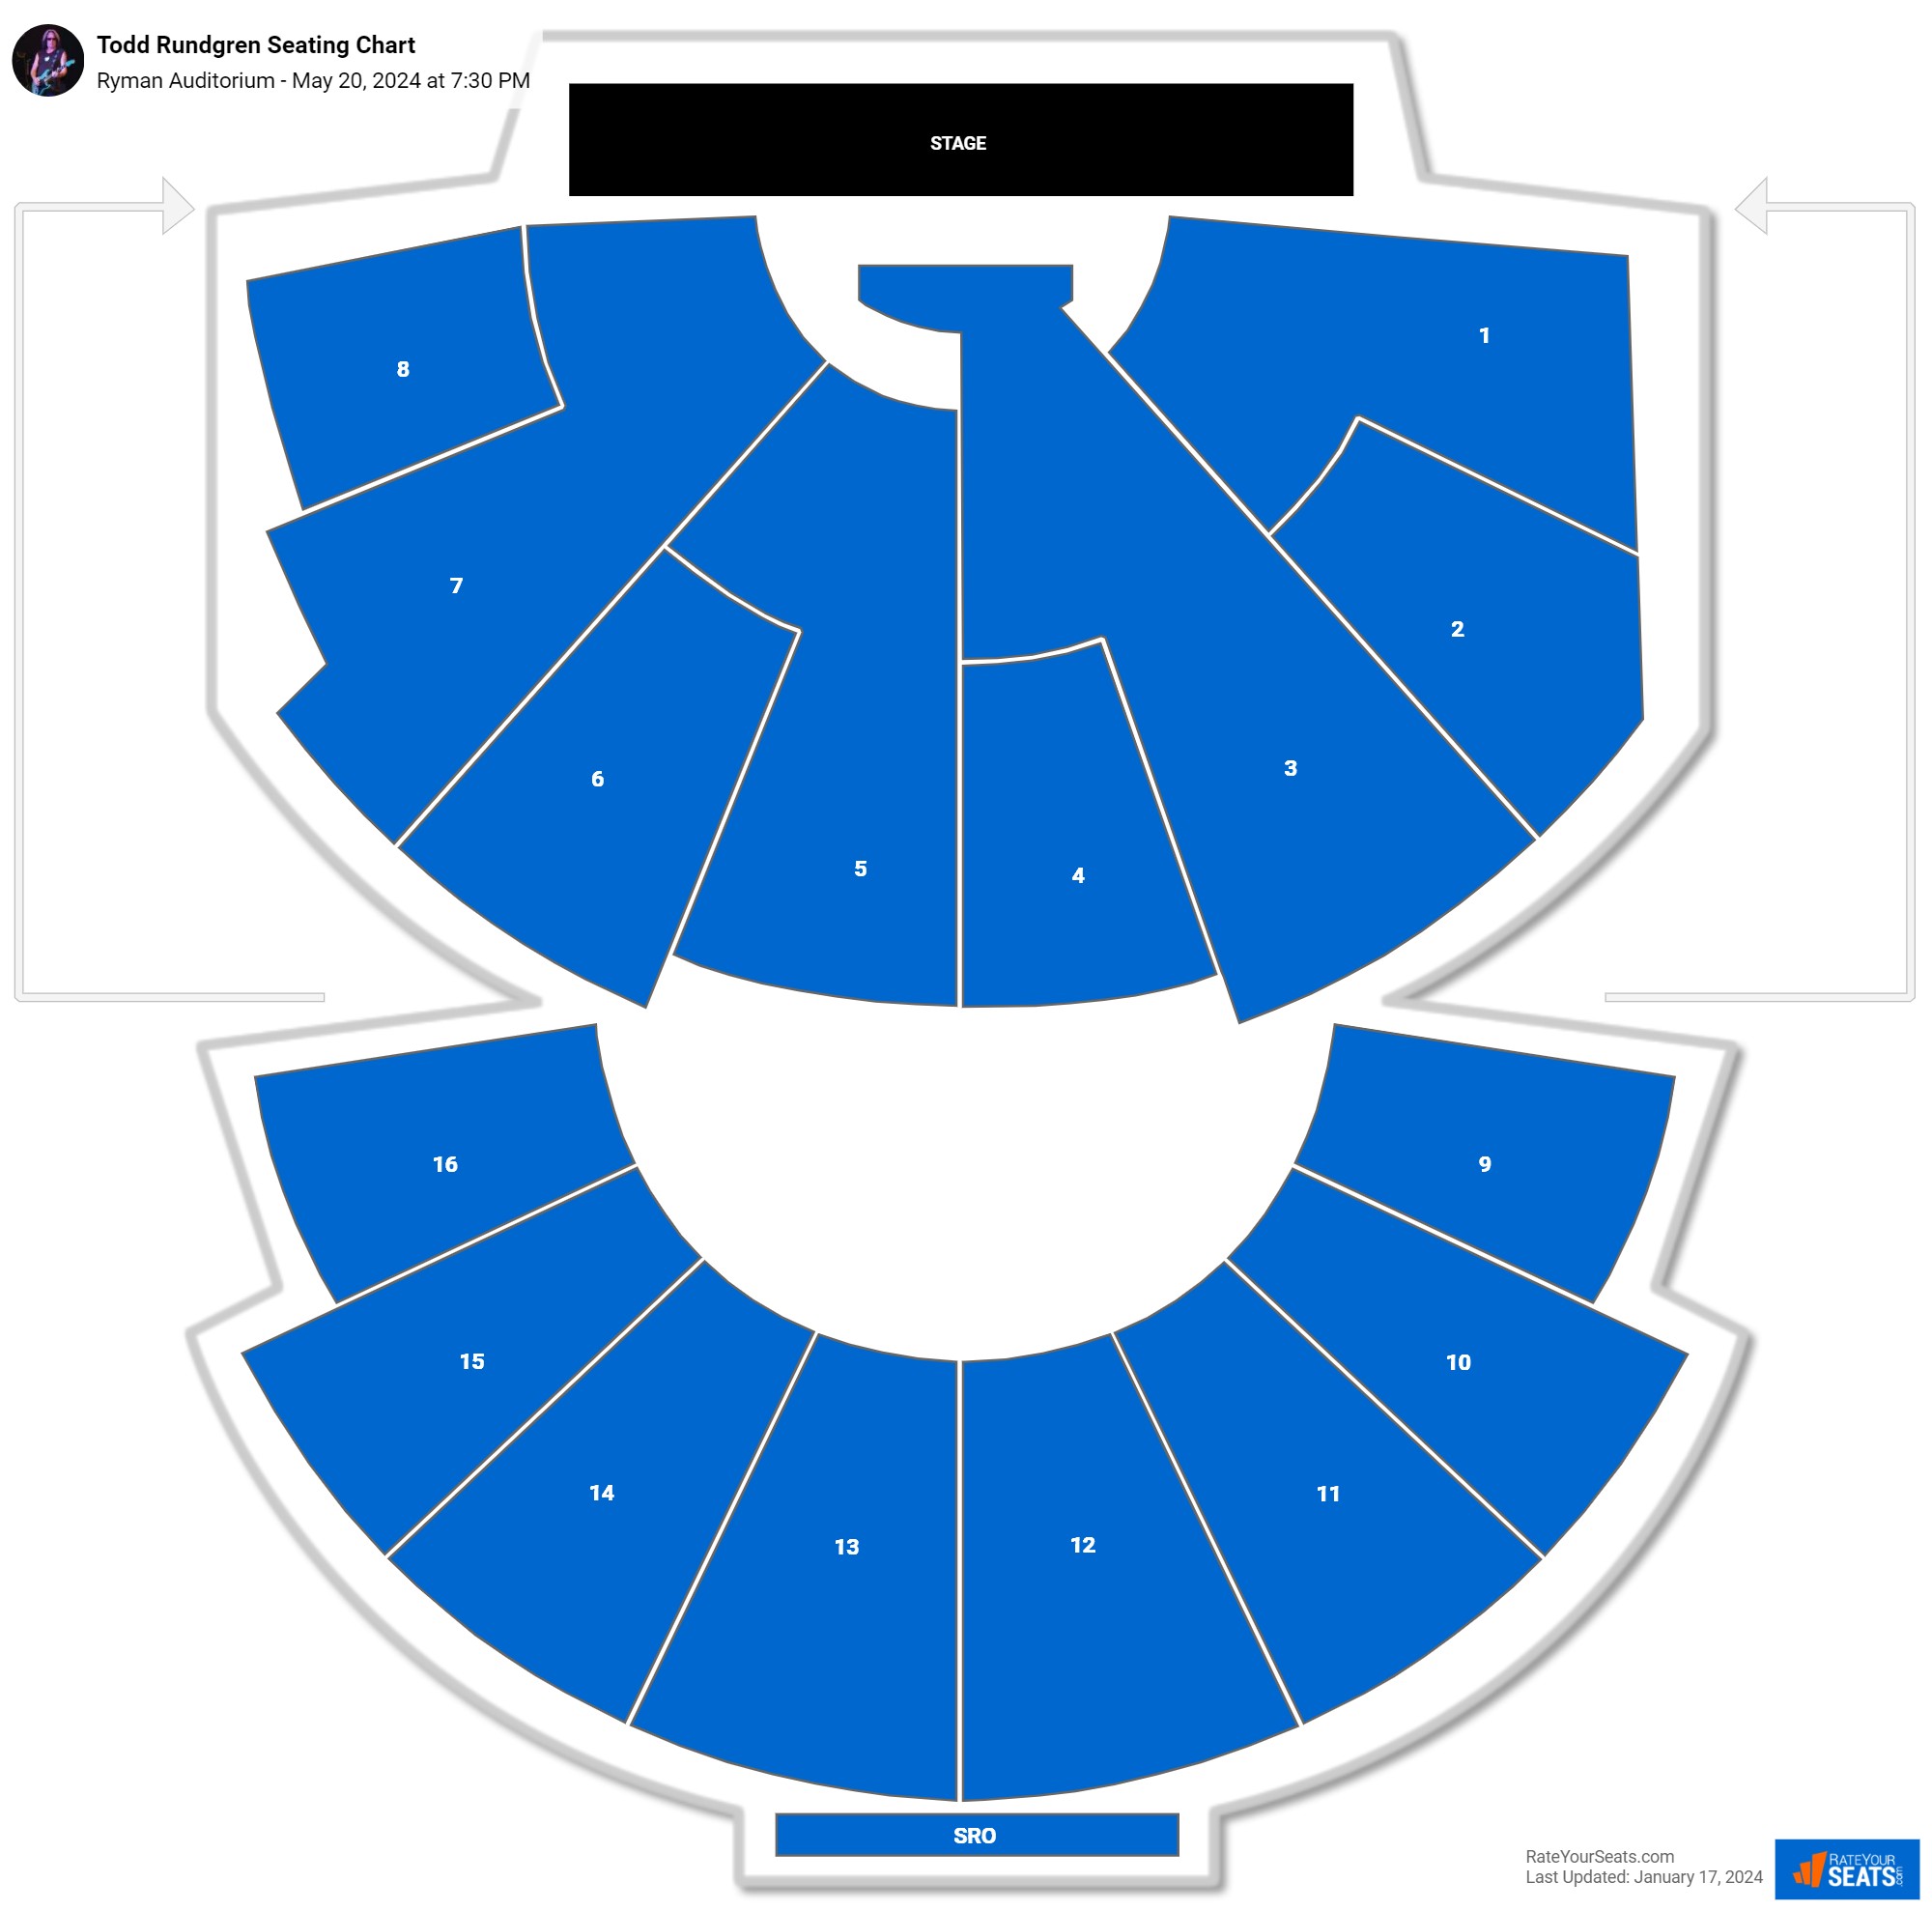 Todd Rundgren seating chart Ryman Auditorium